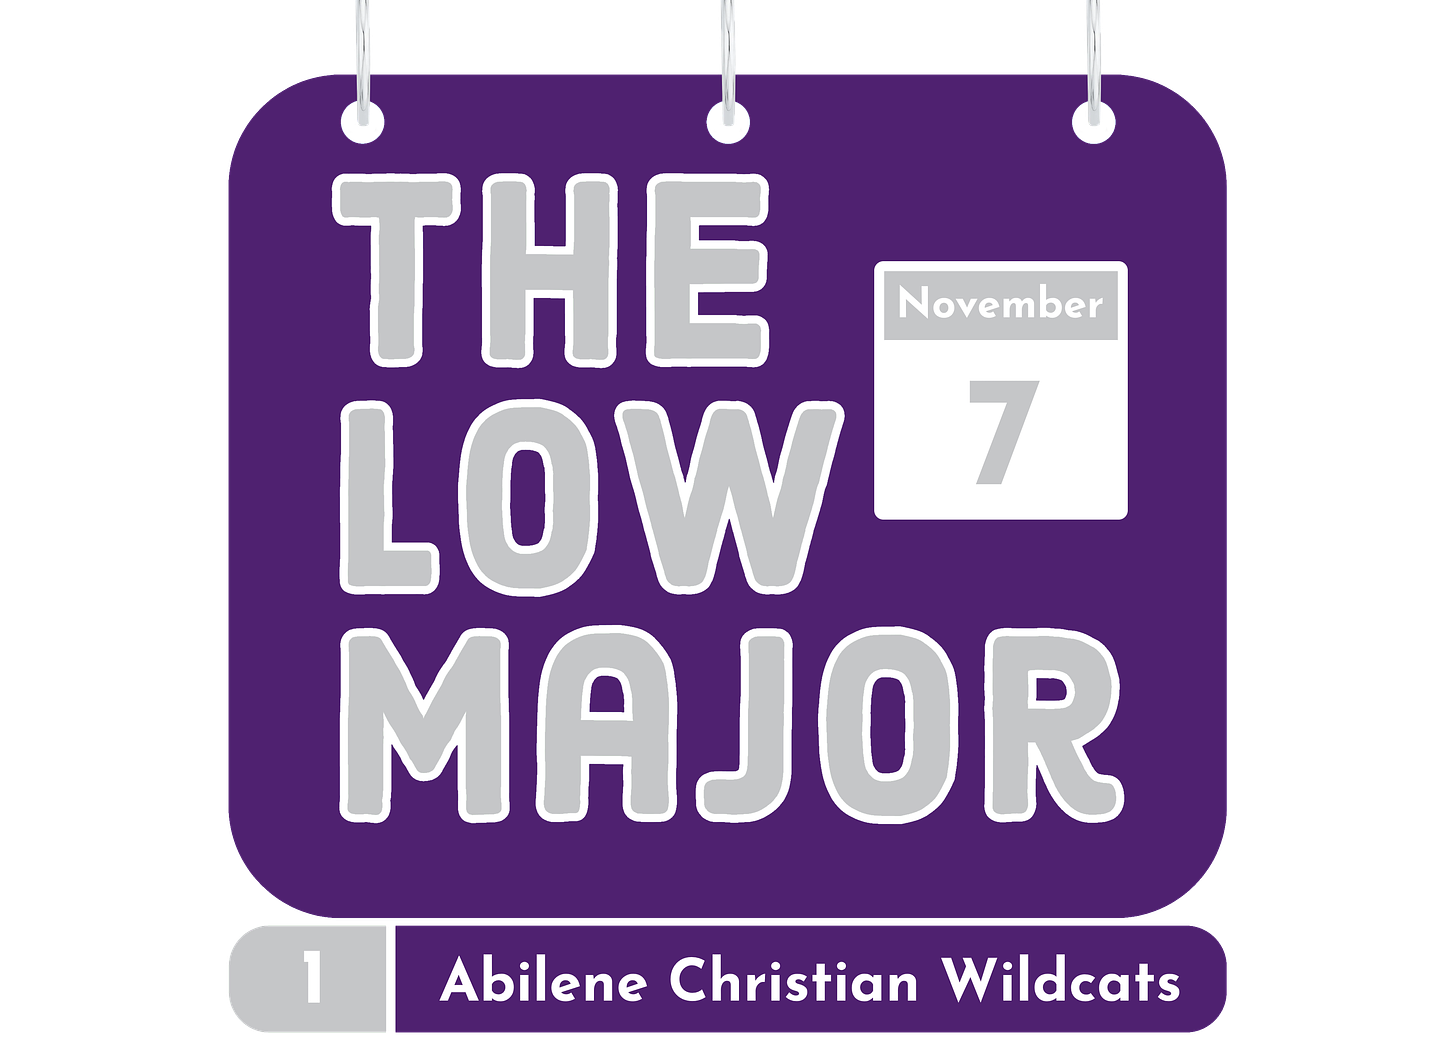 Name-a-Day Calendar 1: Abilene Christian Wildcats